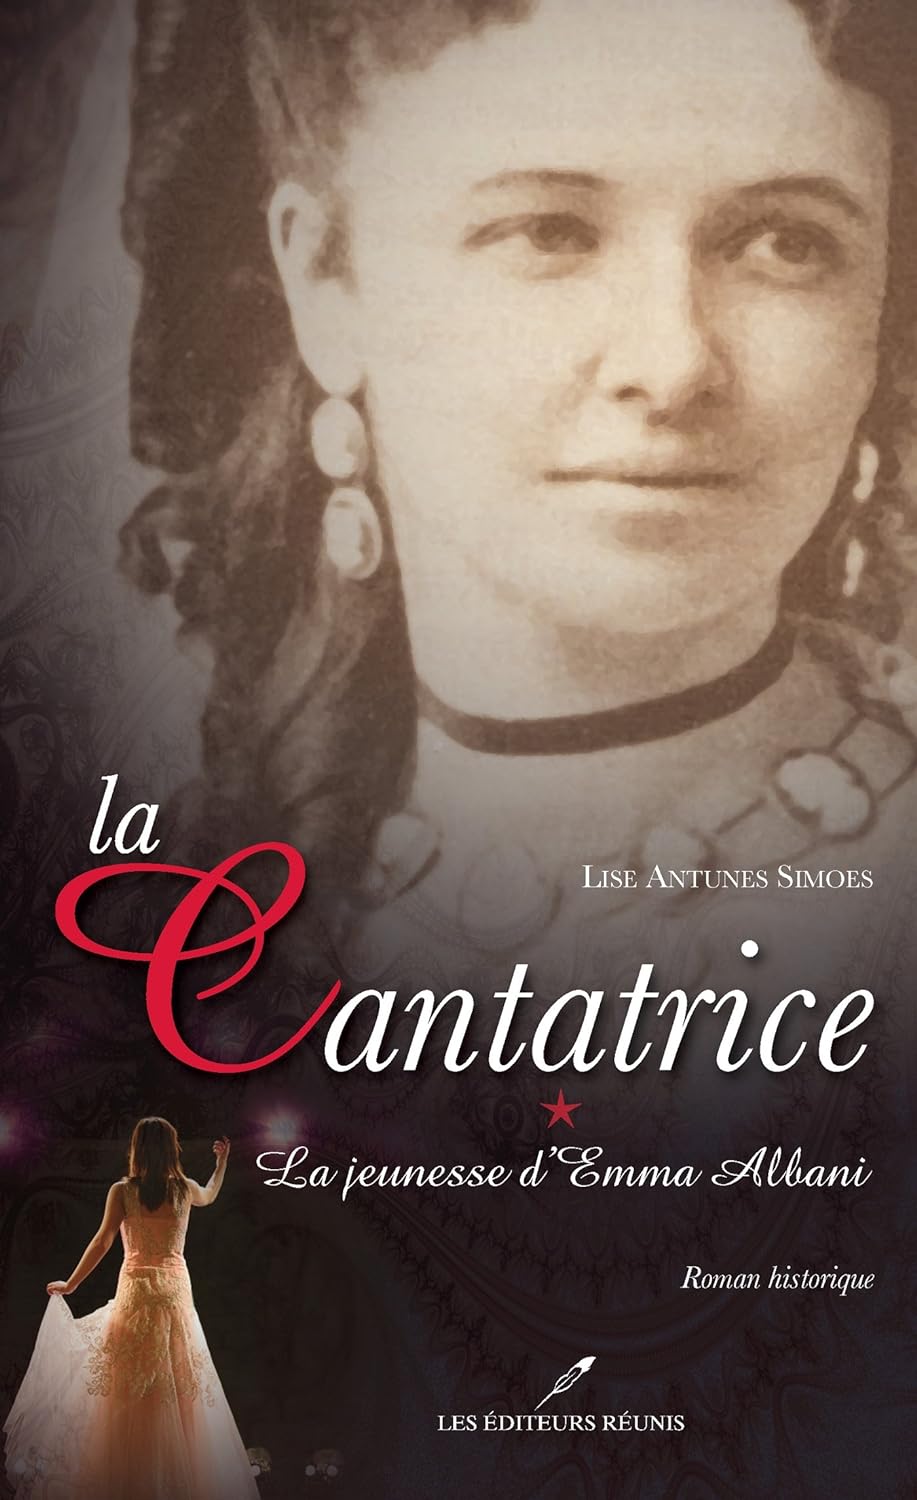 La cantatrice # 1 : La jeunesse d'Emma Albani - Lise Antunes Simoes